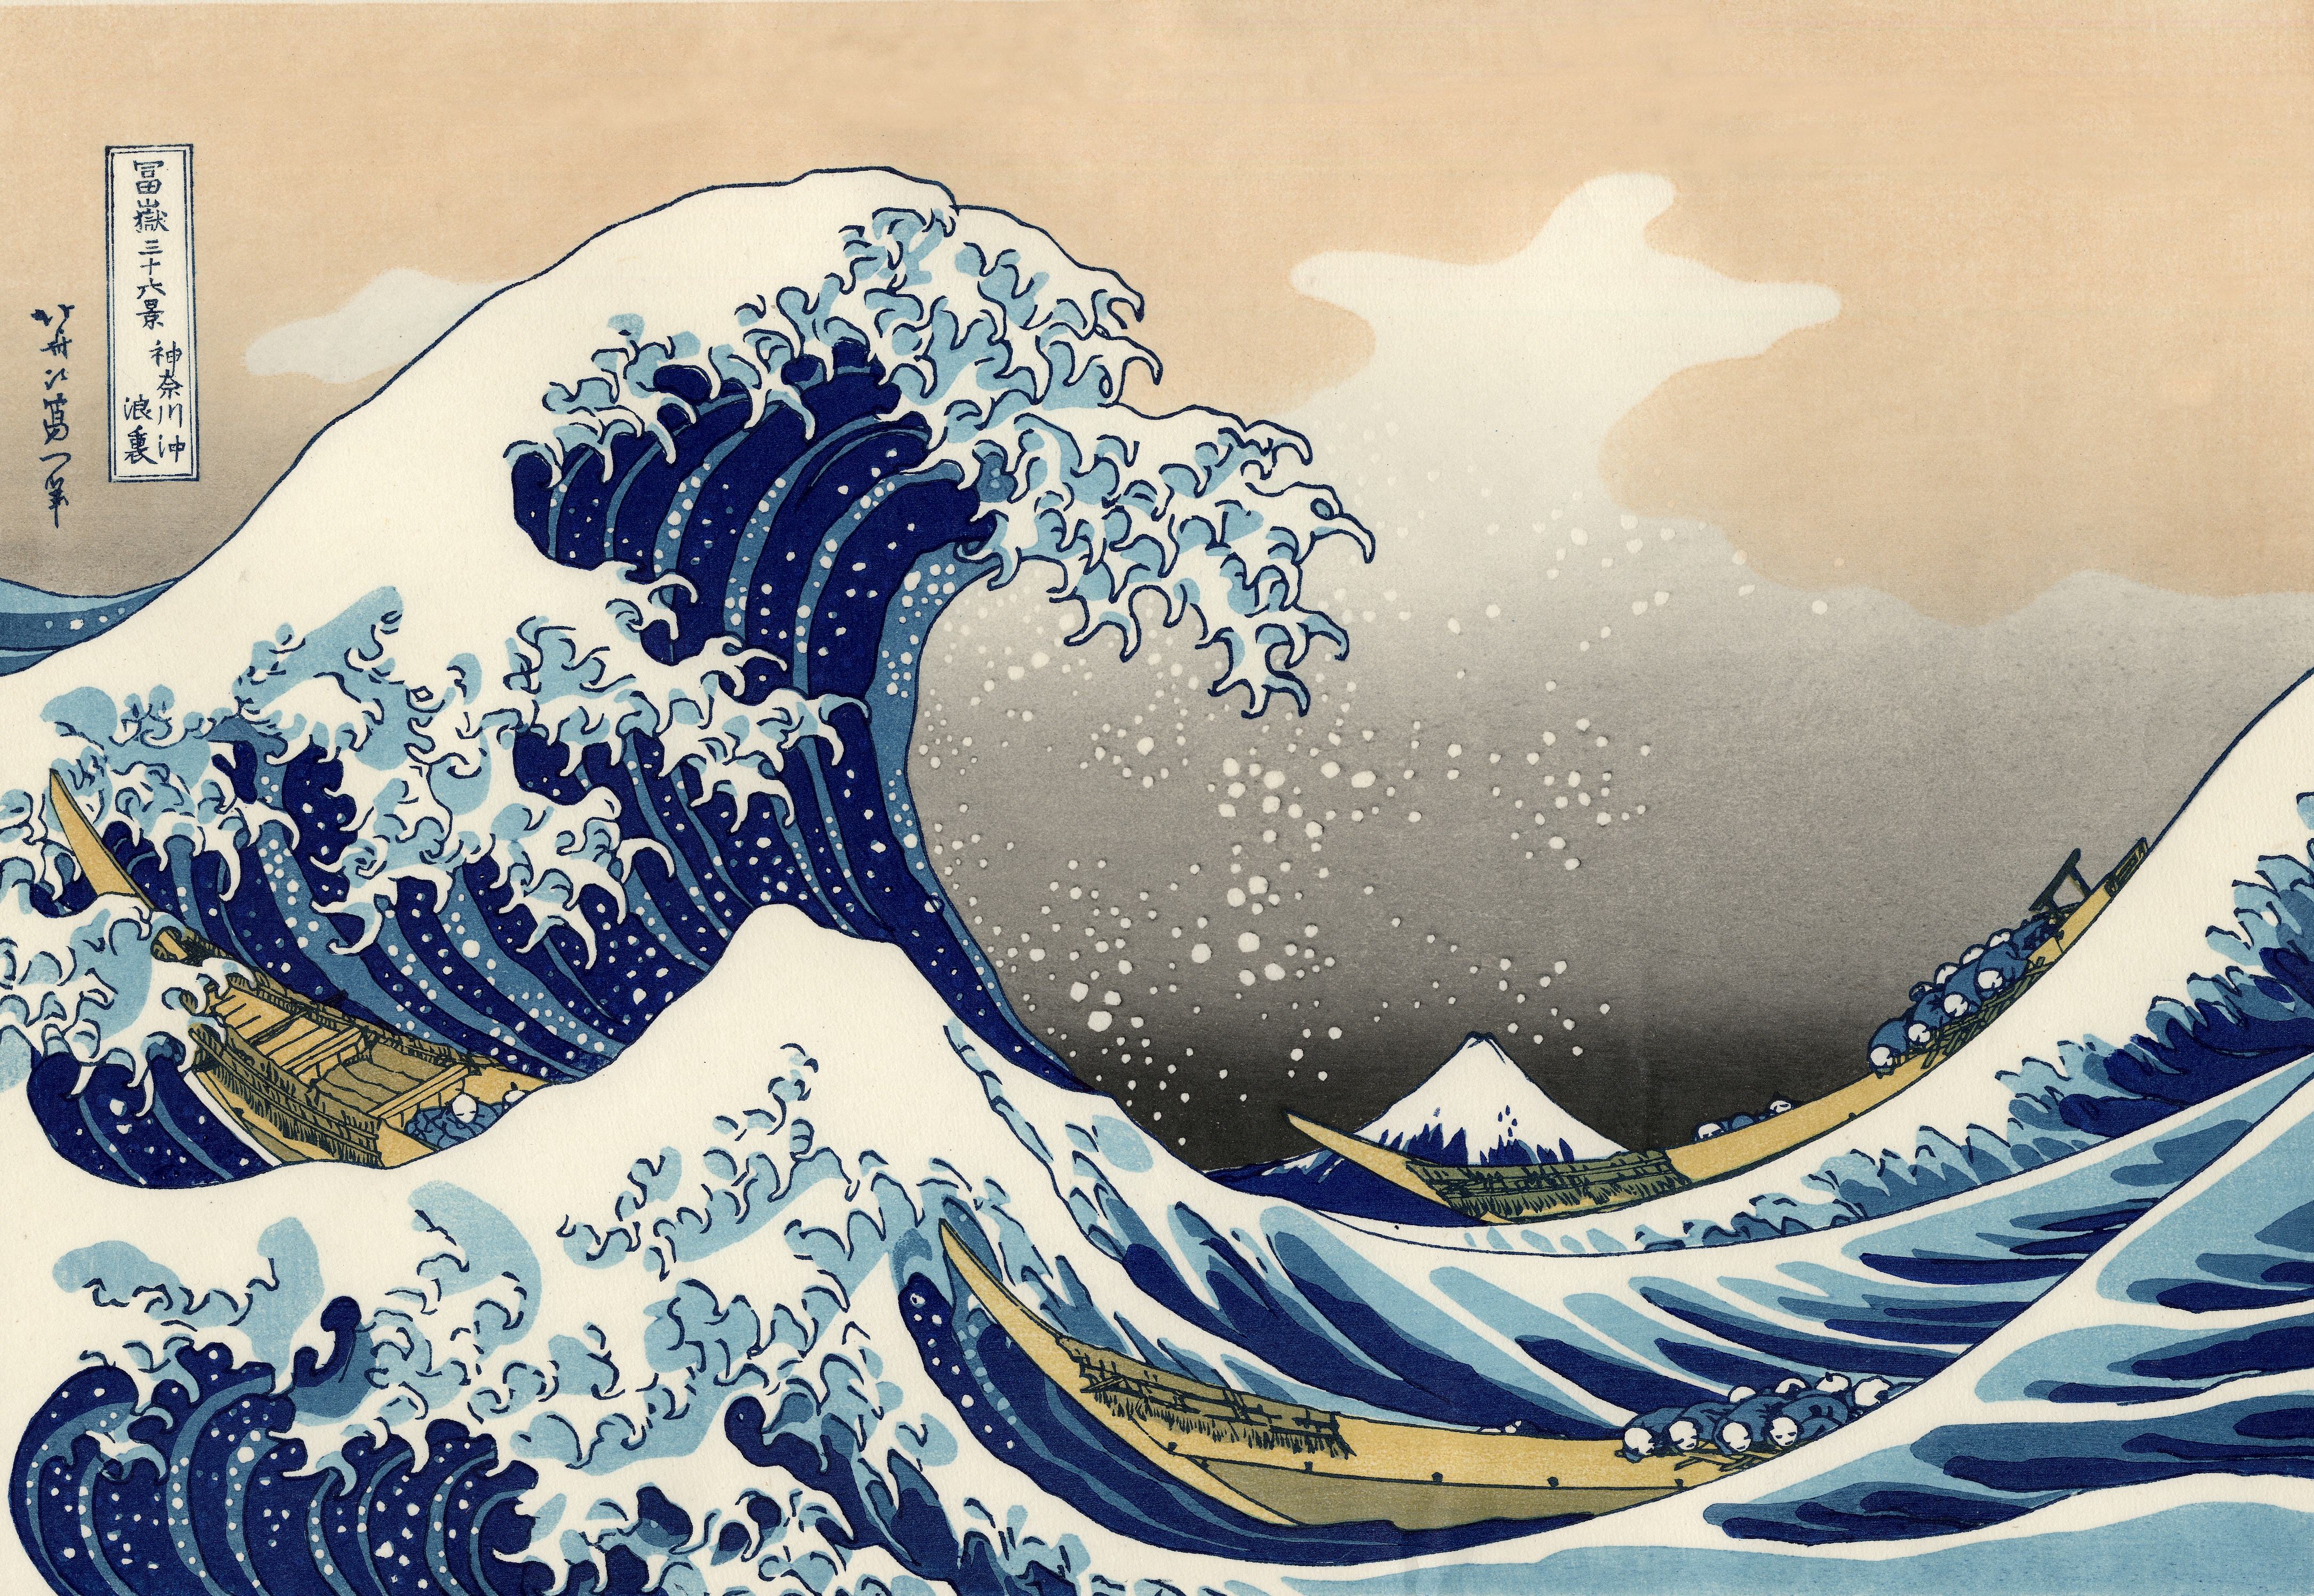 wave, the great wave off kanagawa, artistic iphone wallpaper